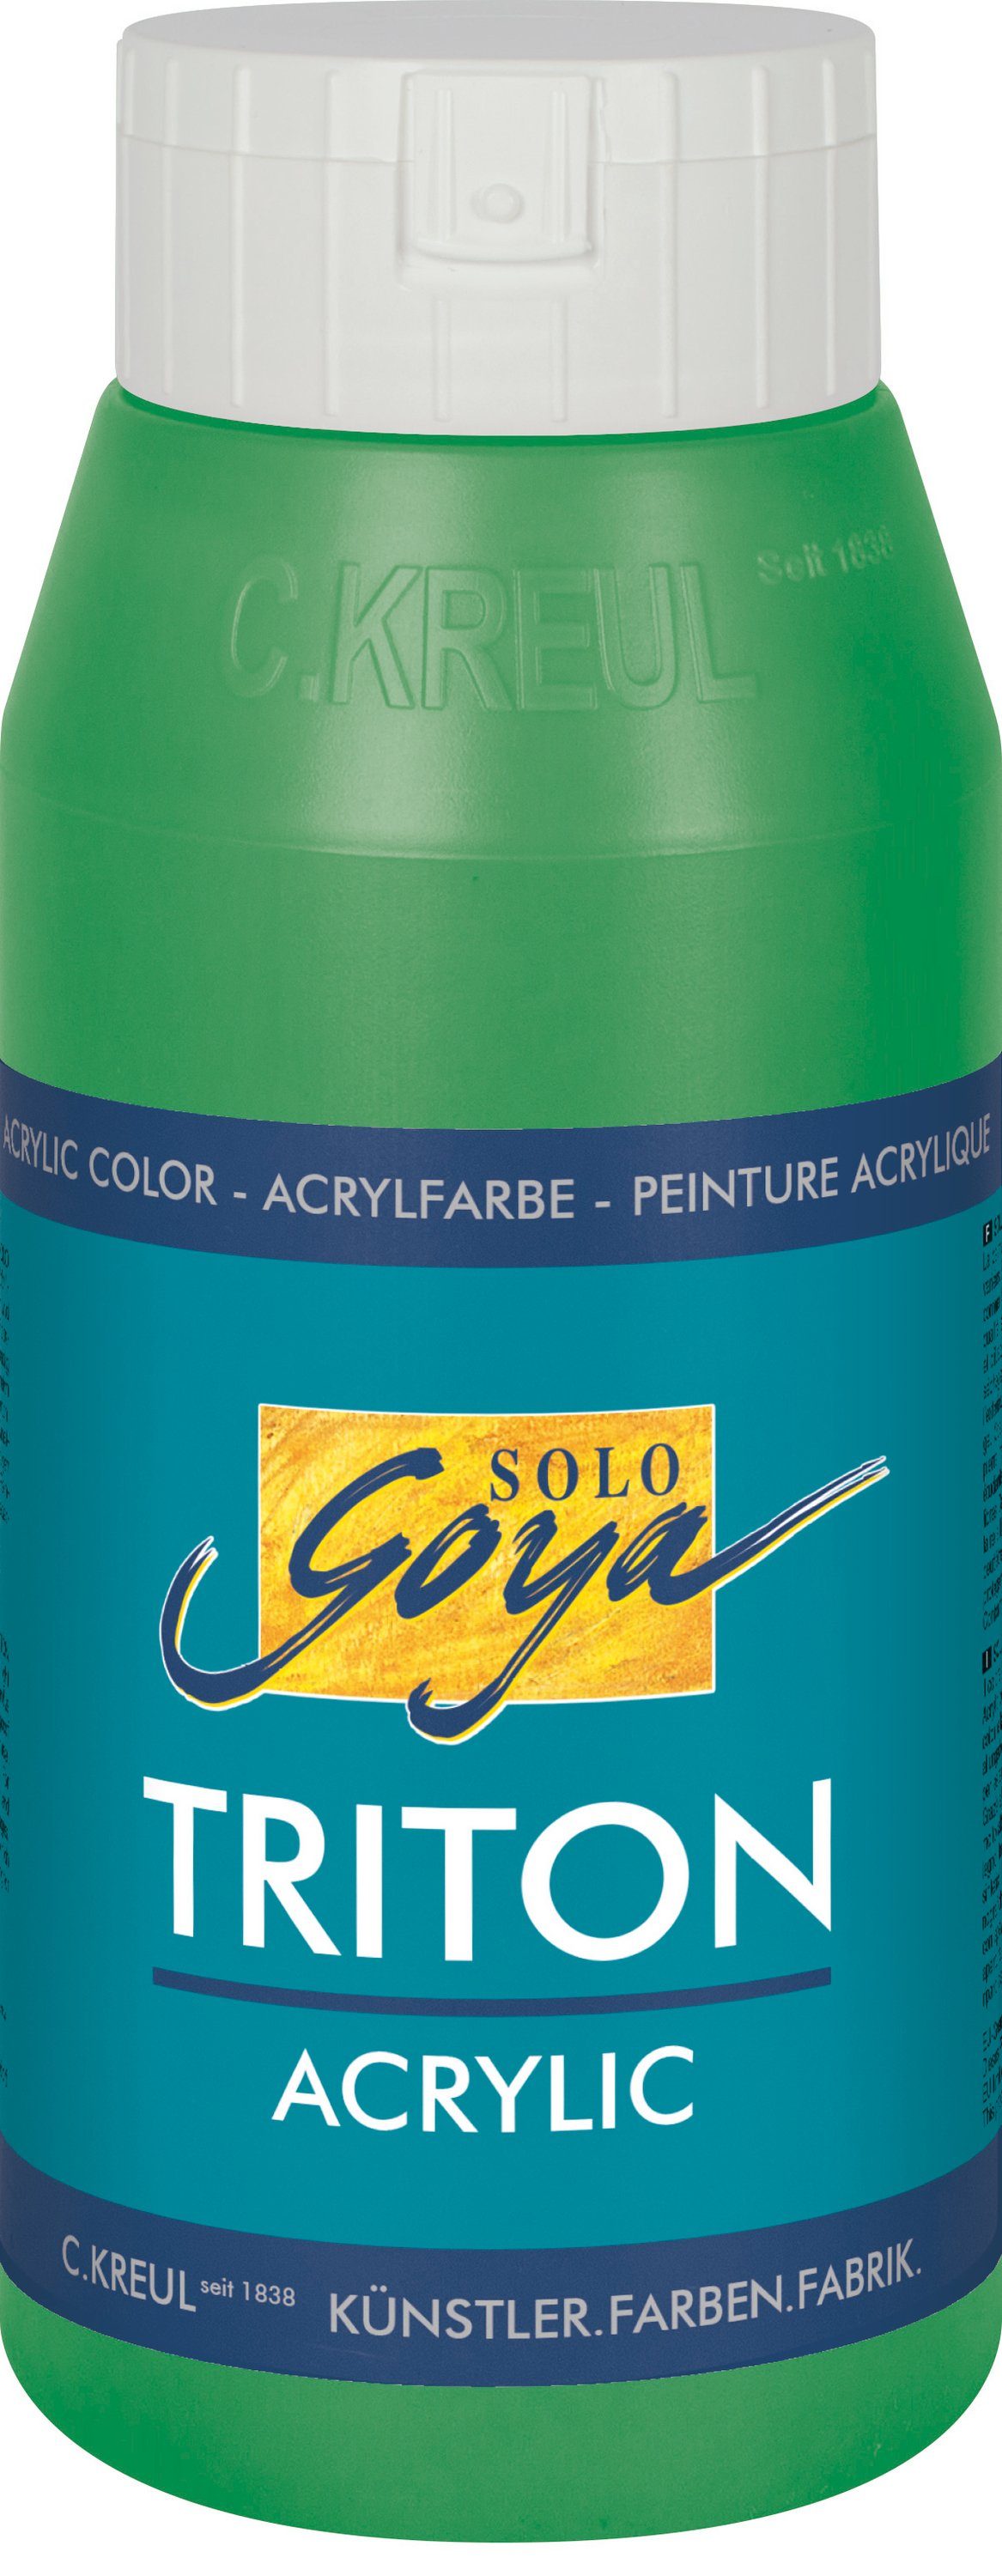 Permanent-Grün Acrylic, Kreul Solo Goya 750 ml Acrylfarbe Triton